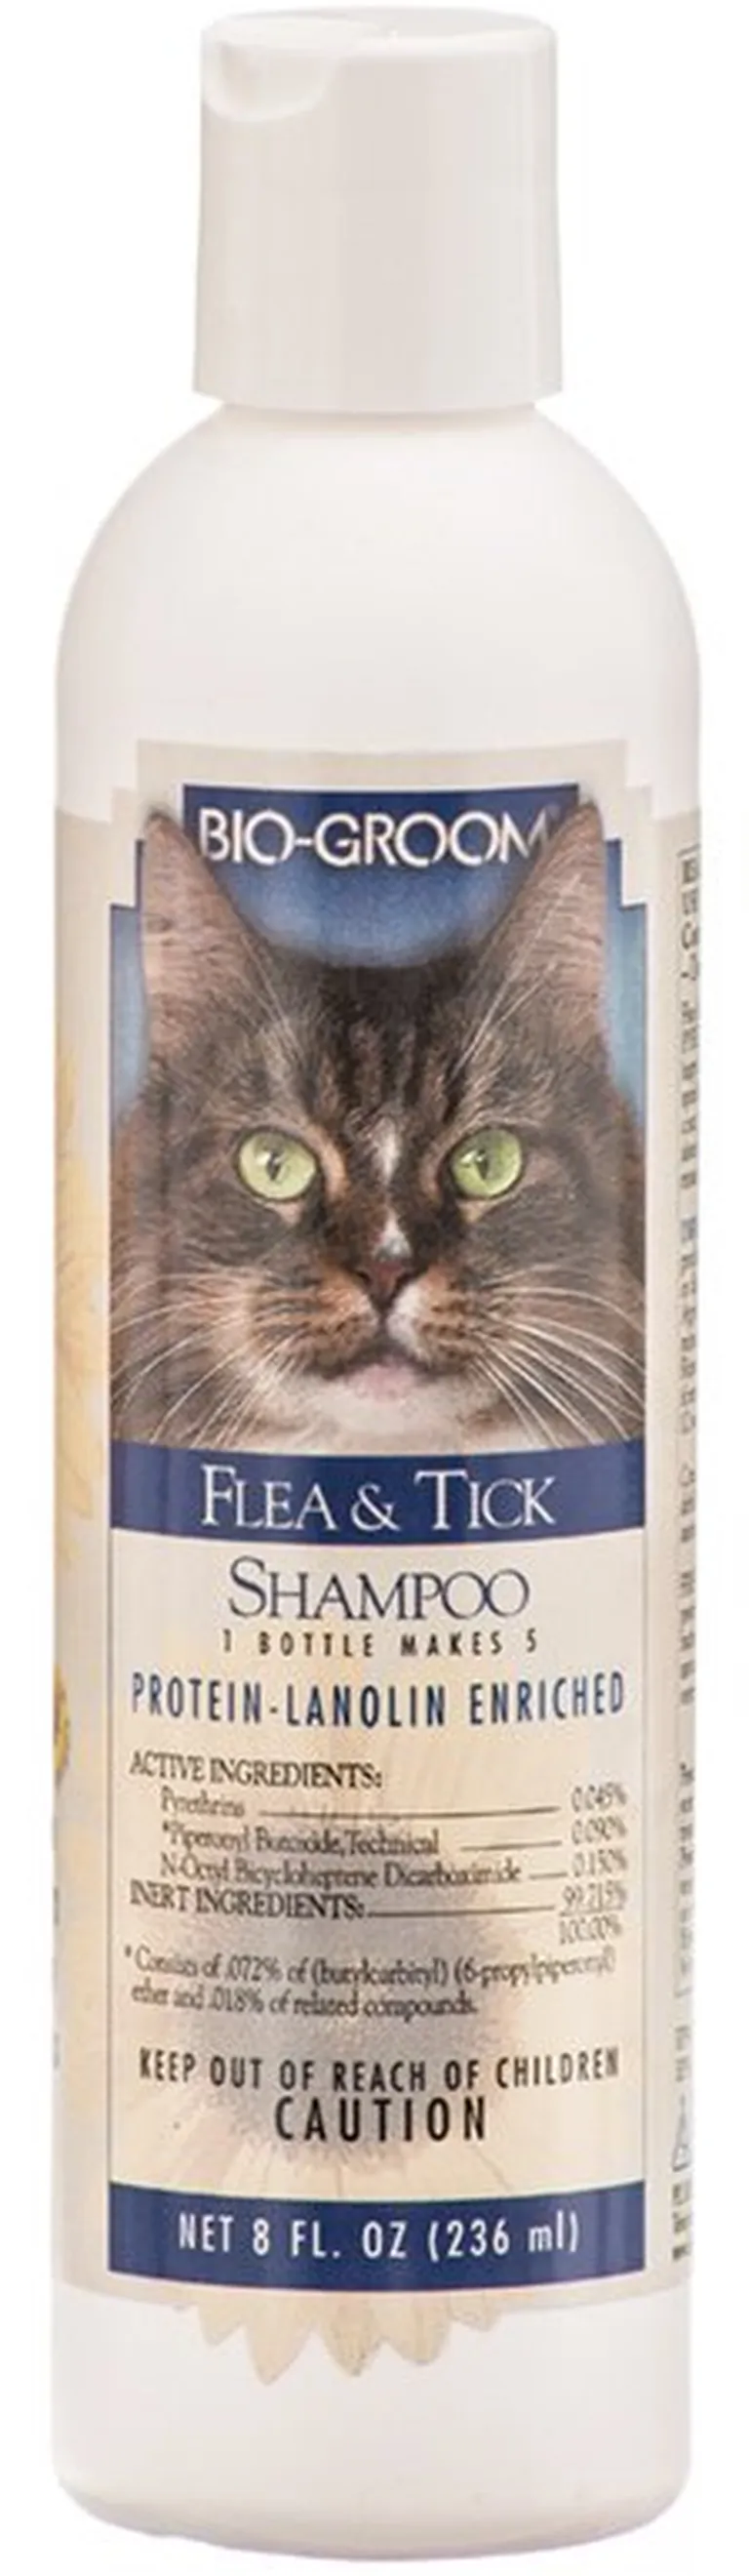 Bio Groom Flea and Tick Shampoo for Cats 8 oz Photo 2